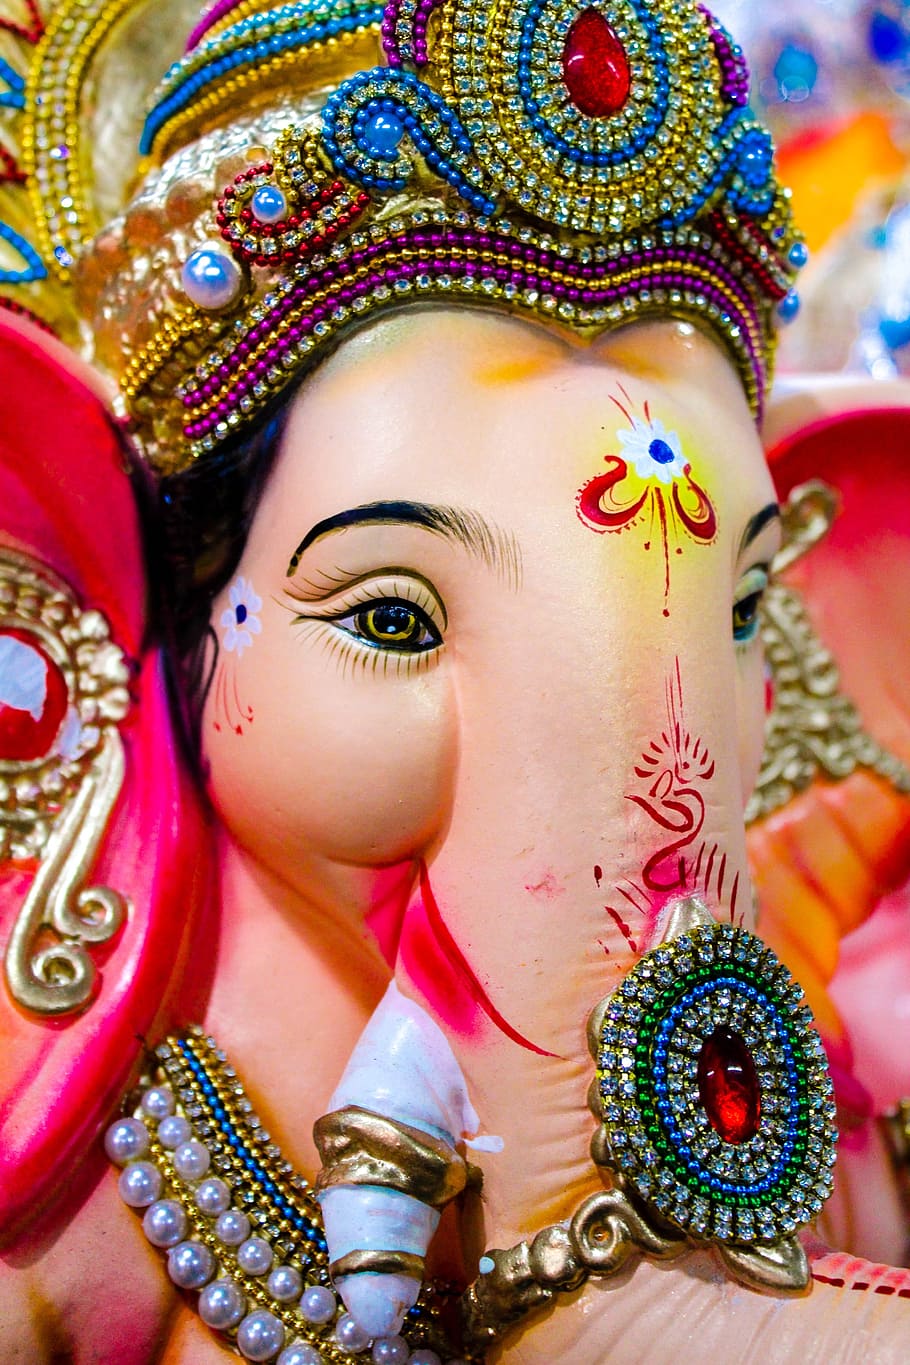 tuan patung Ganesha, tuan Ganesha, tuan Ganesh, Ganesh, Ganesha, tuan India, Dewa India, Dewa Asia, tuan Asia, pakaian tradisional